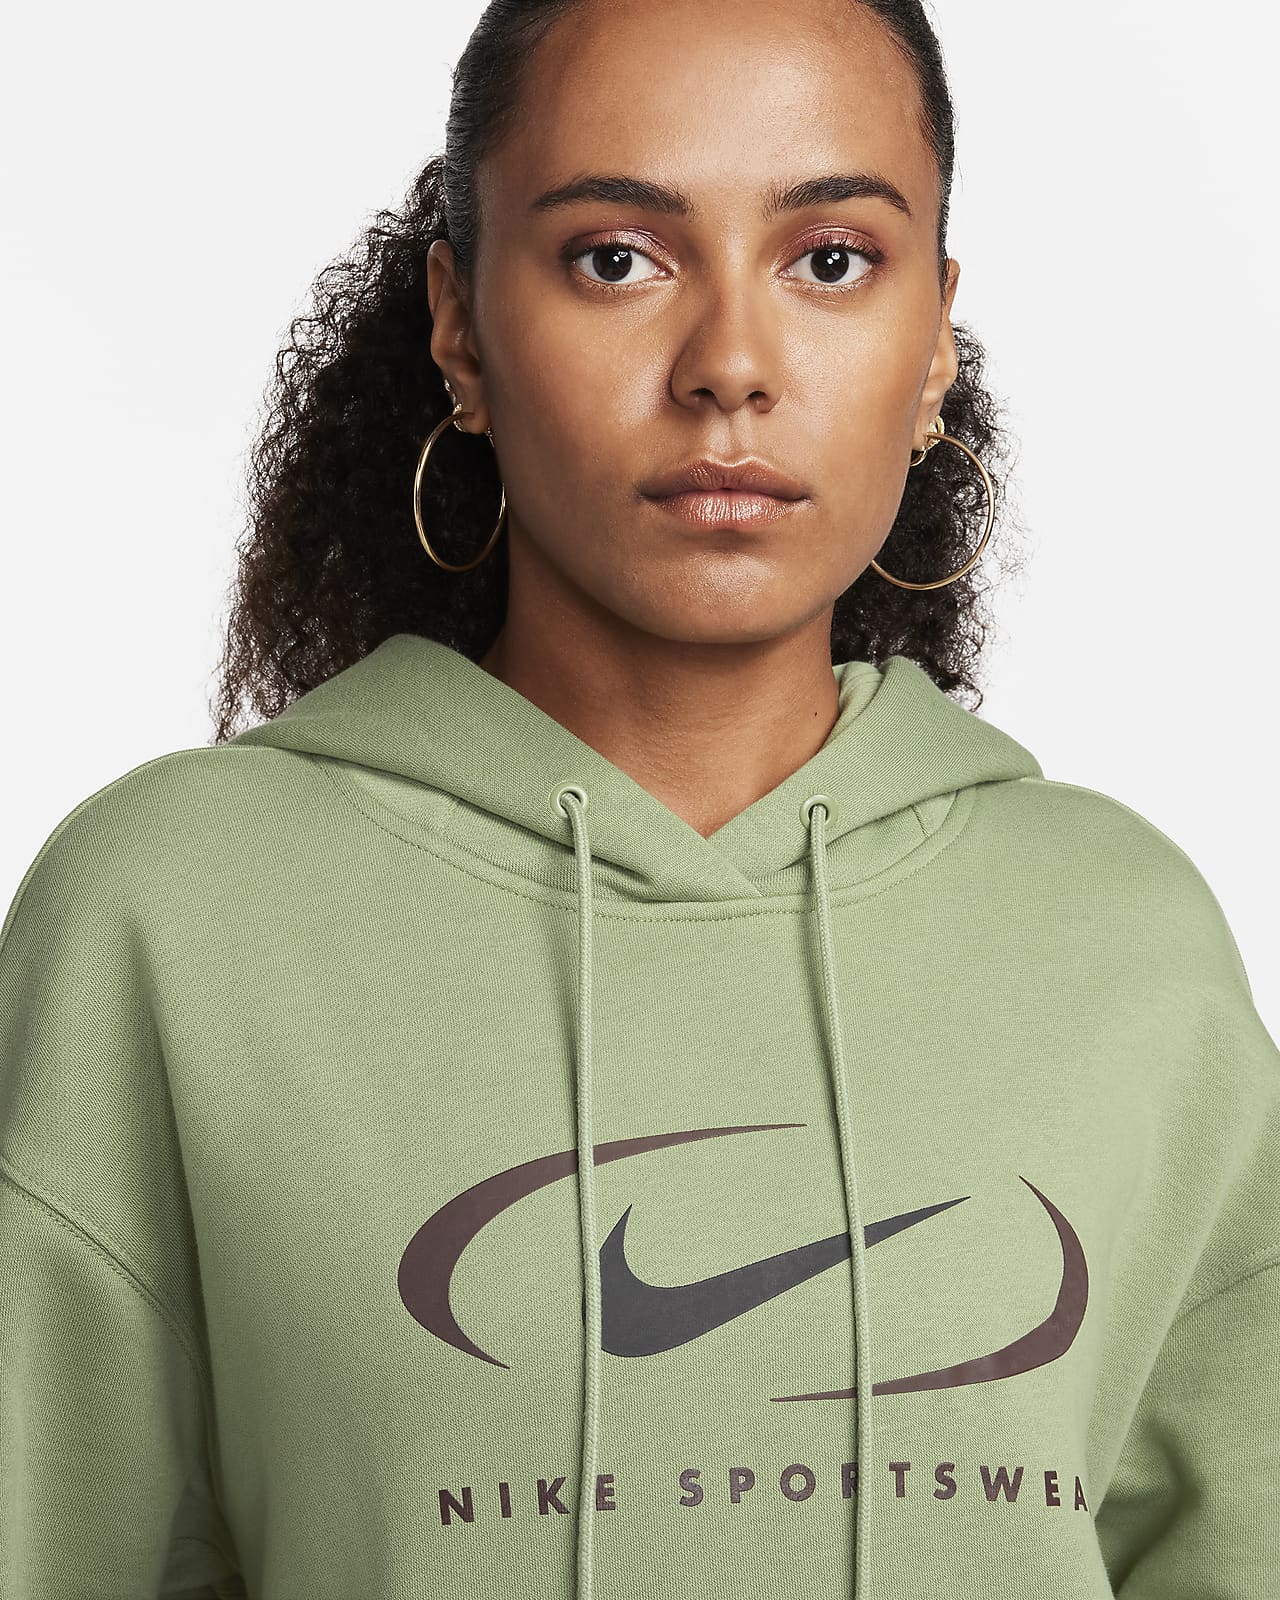 Women's Hoodies & Sweatshirts. Nike IN